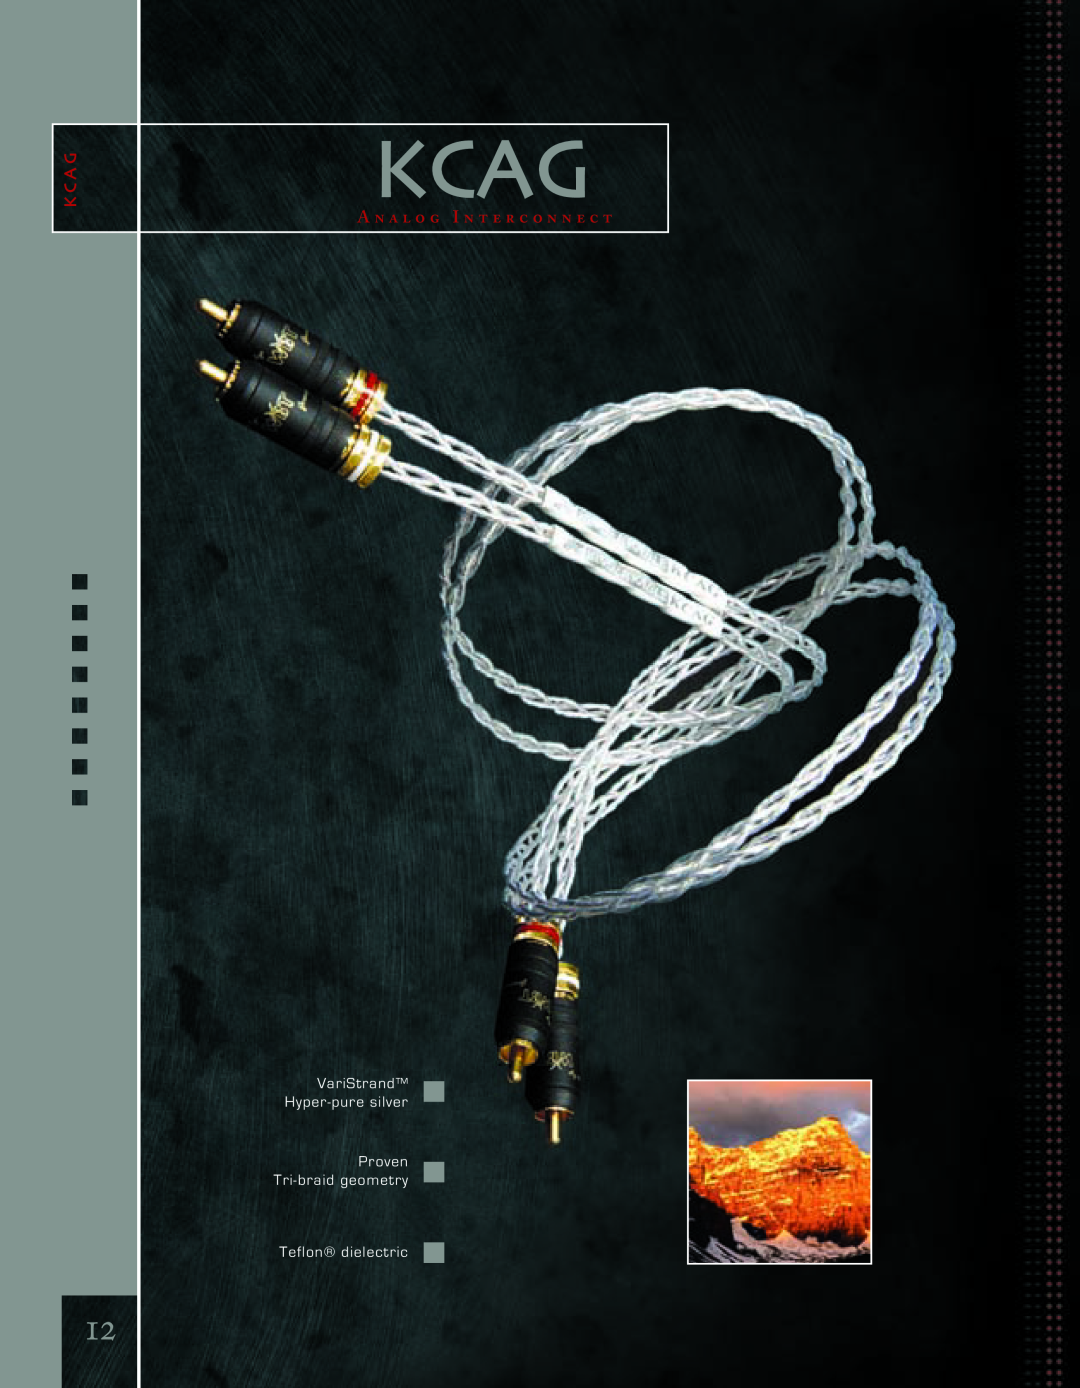 Kimber Kable PowerKordsTM manual Kcag, K C A G, A n a l o g I n t e r c o n n e c t, VariStrand Hyper-puresilver Proven 